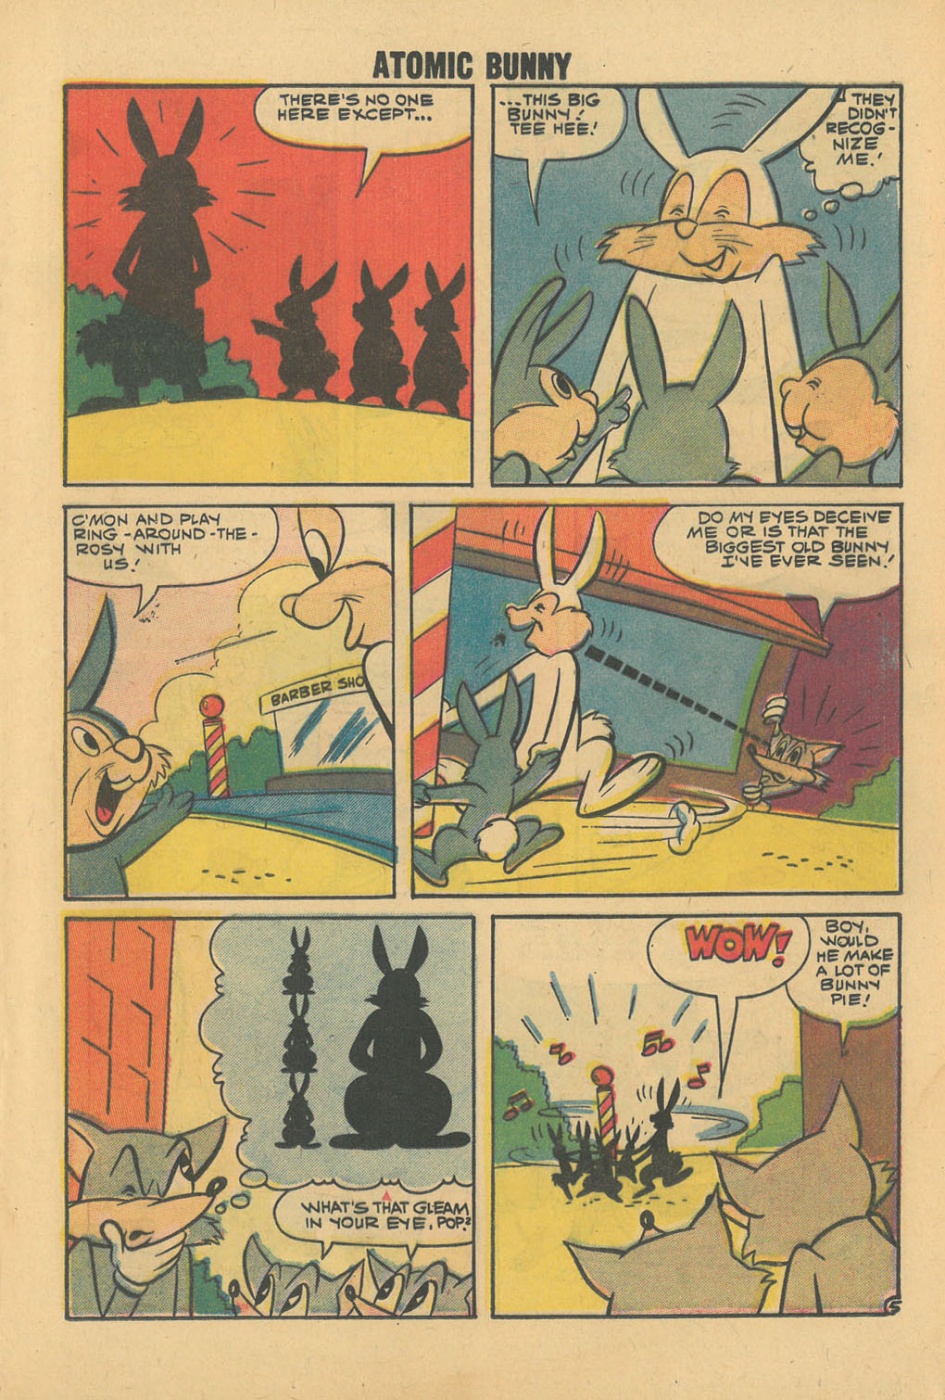 Atomic-Bunny-Comic-Strips (c) (17)